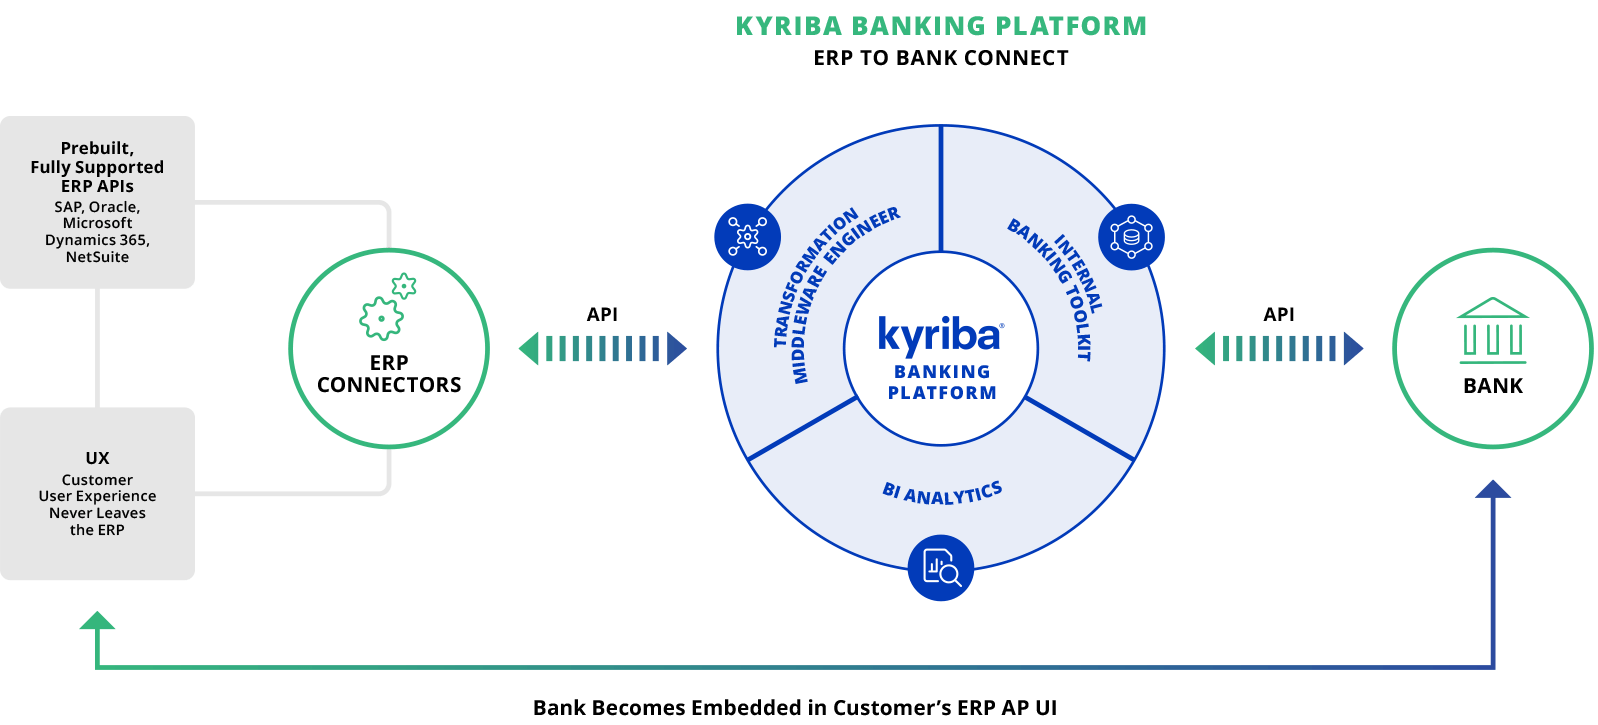 Kyriba Bank Connectivity as a Service Platform